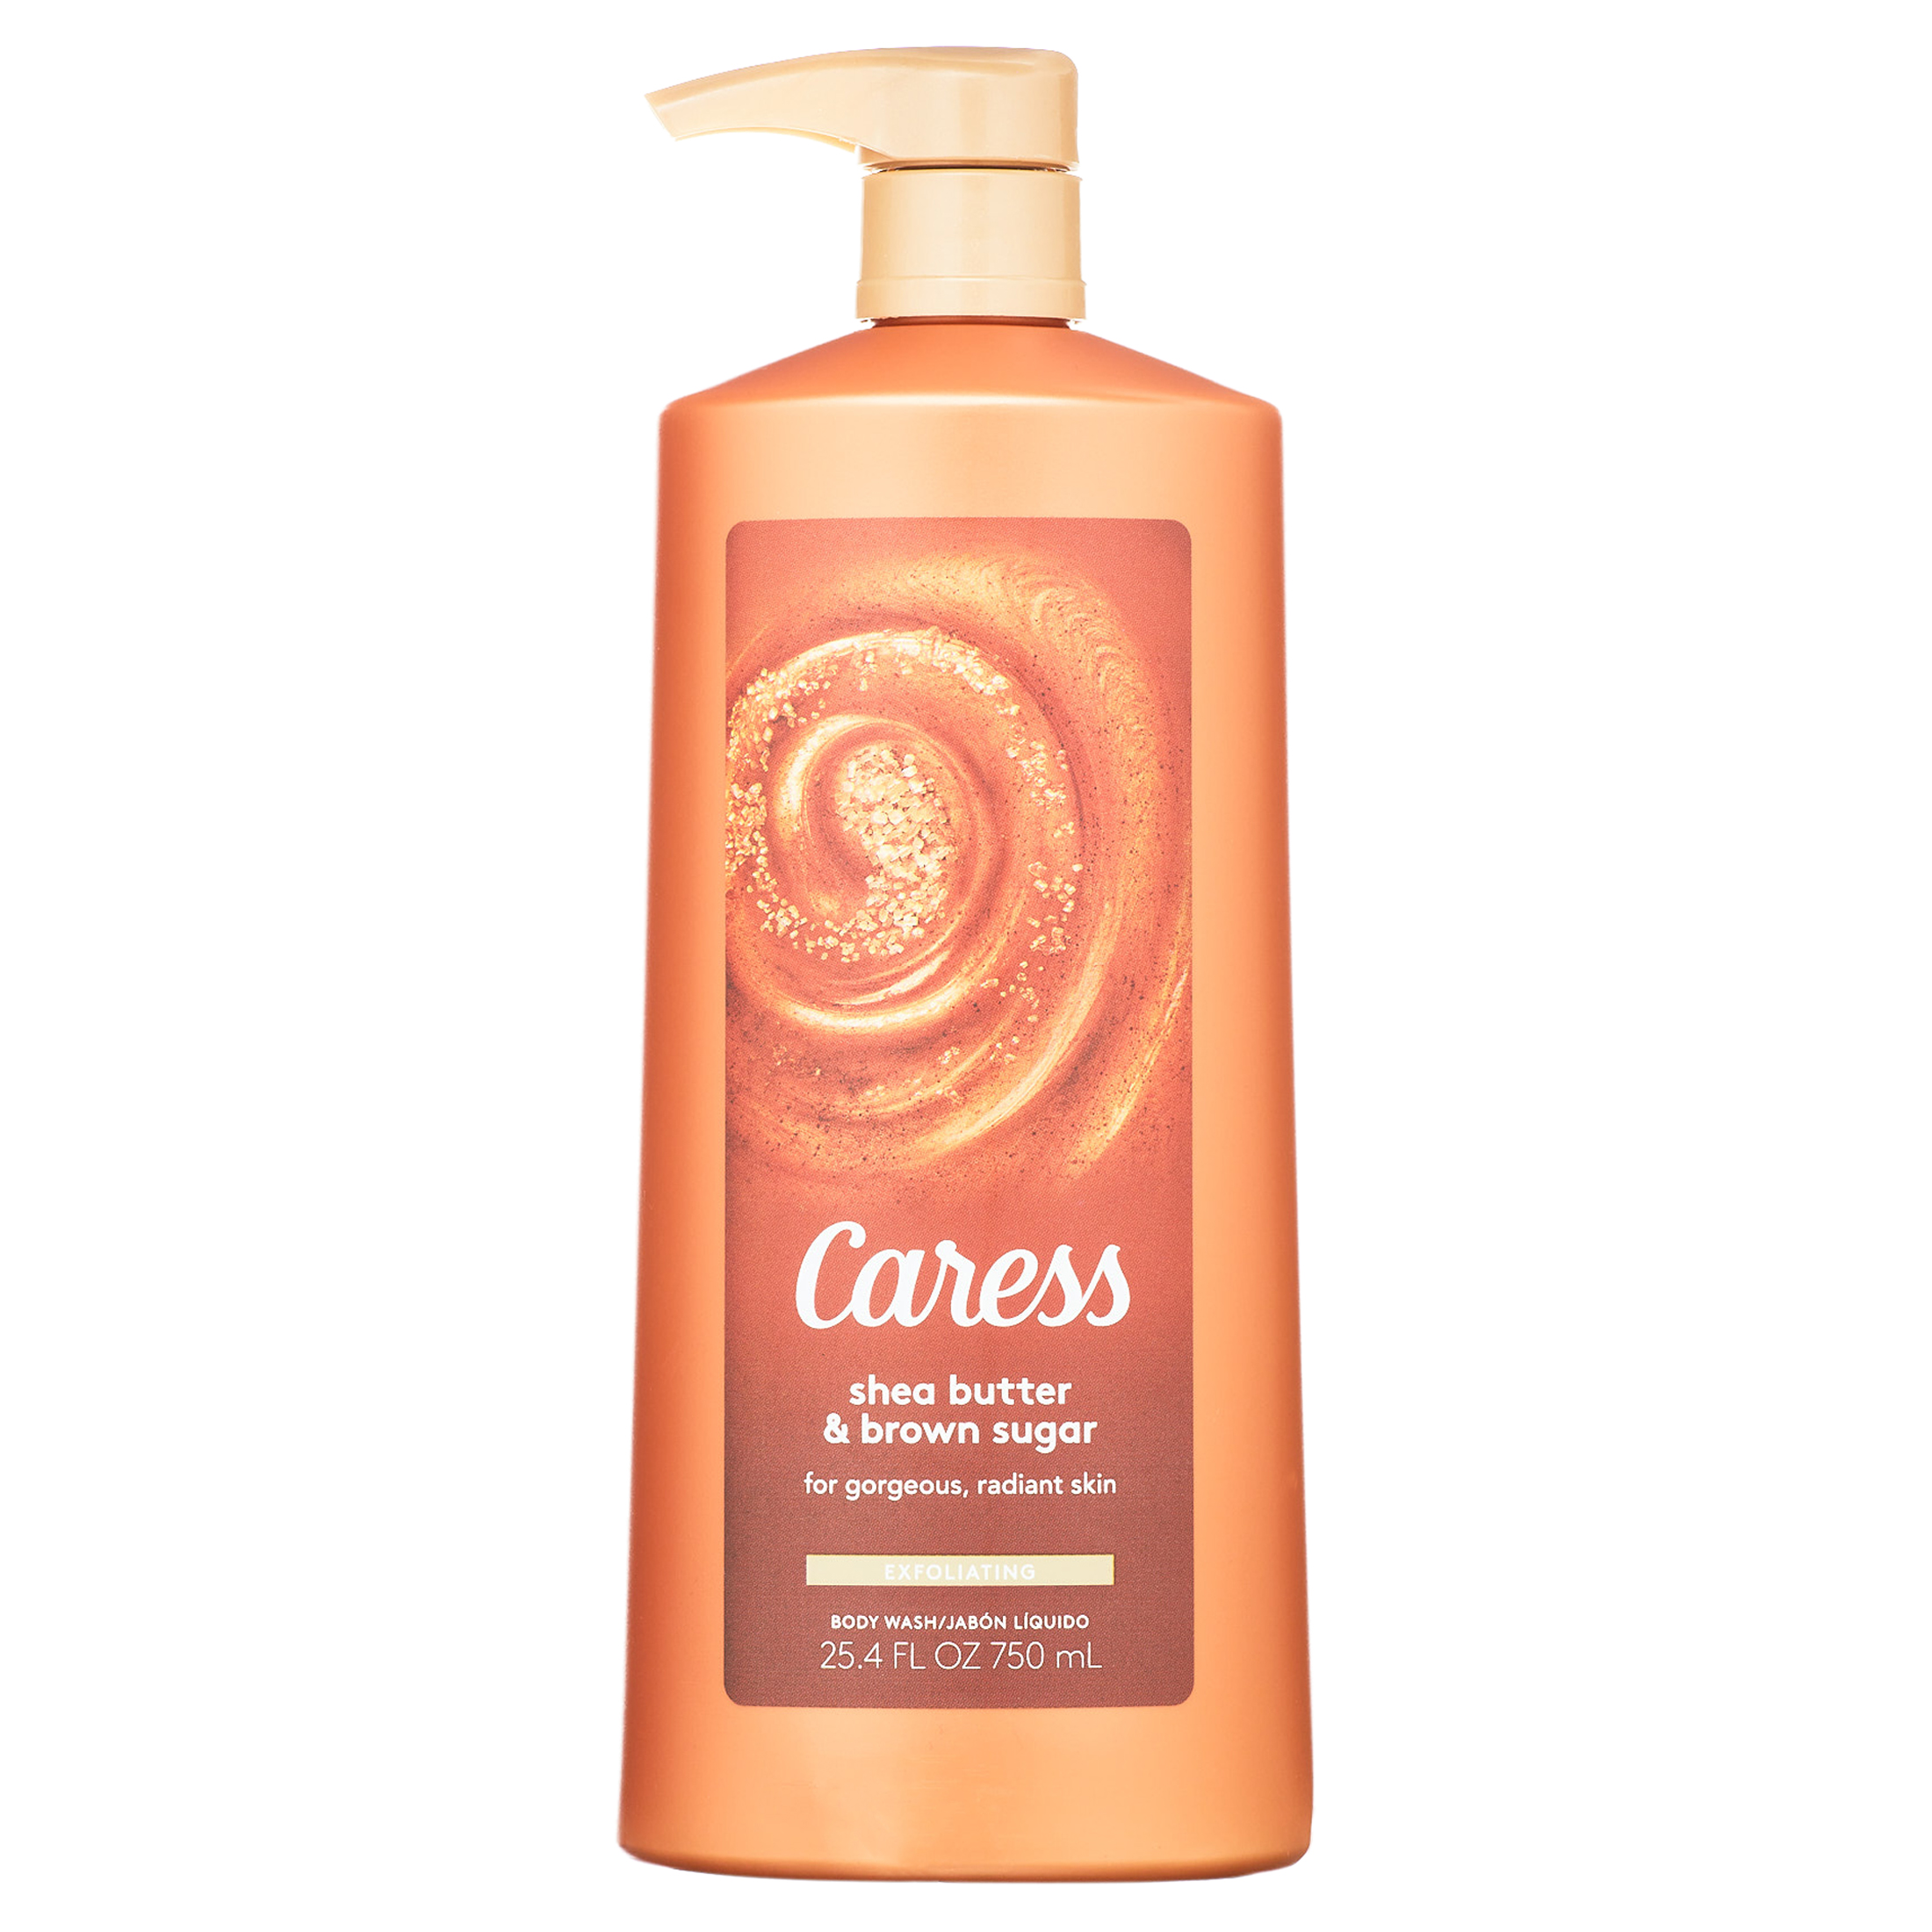 Caress Body Wash for Women, Shea Butter & Brown Sugar Shower Gel for Dry Skin 25.4 fl oz - image 1 of 4